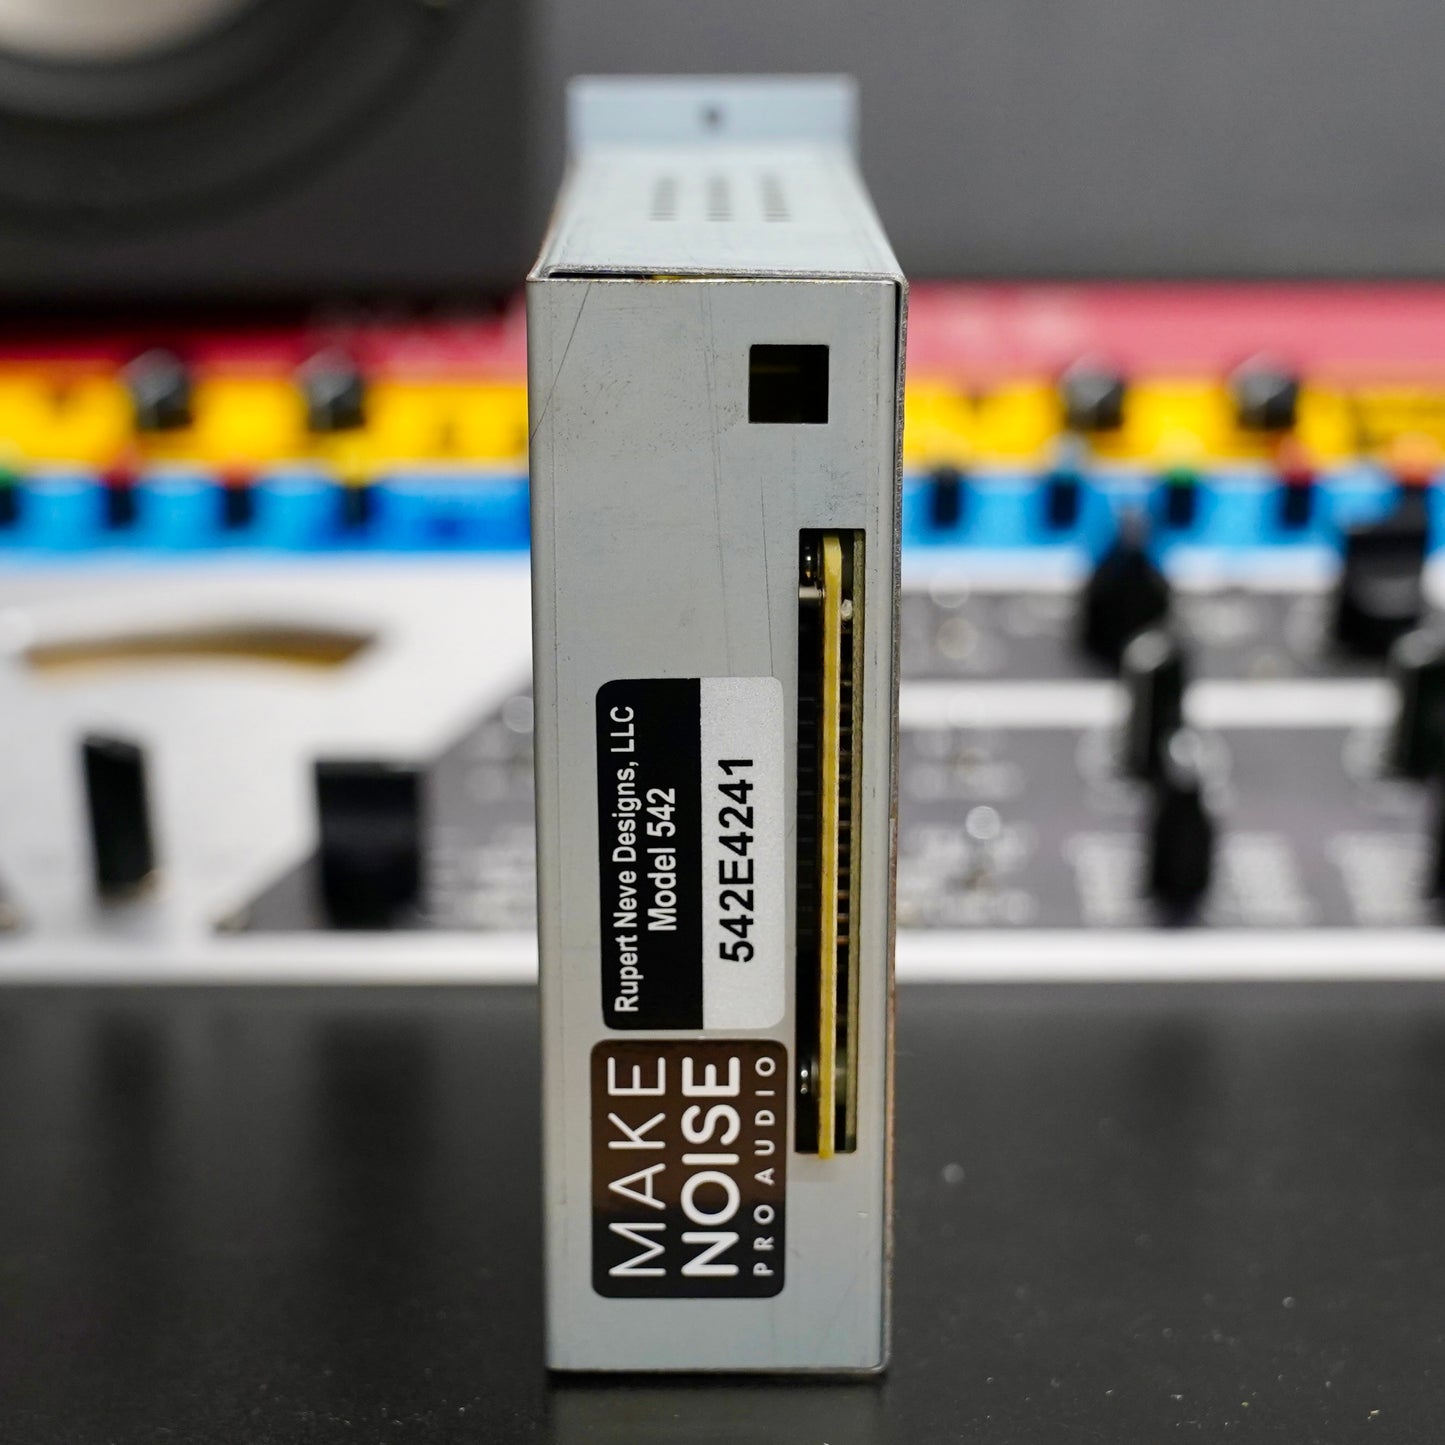 Rupert Neve 542 Tape Emulator